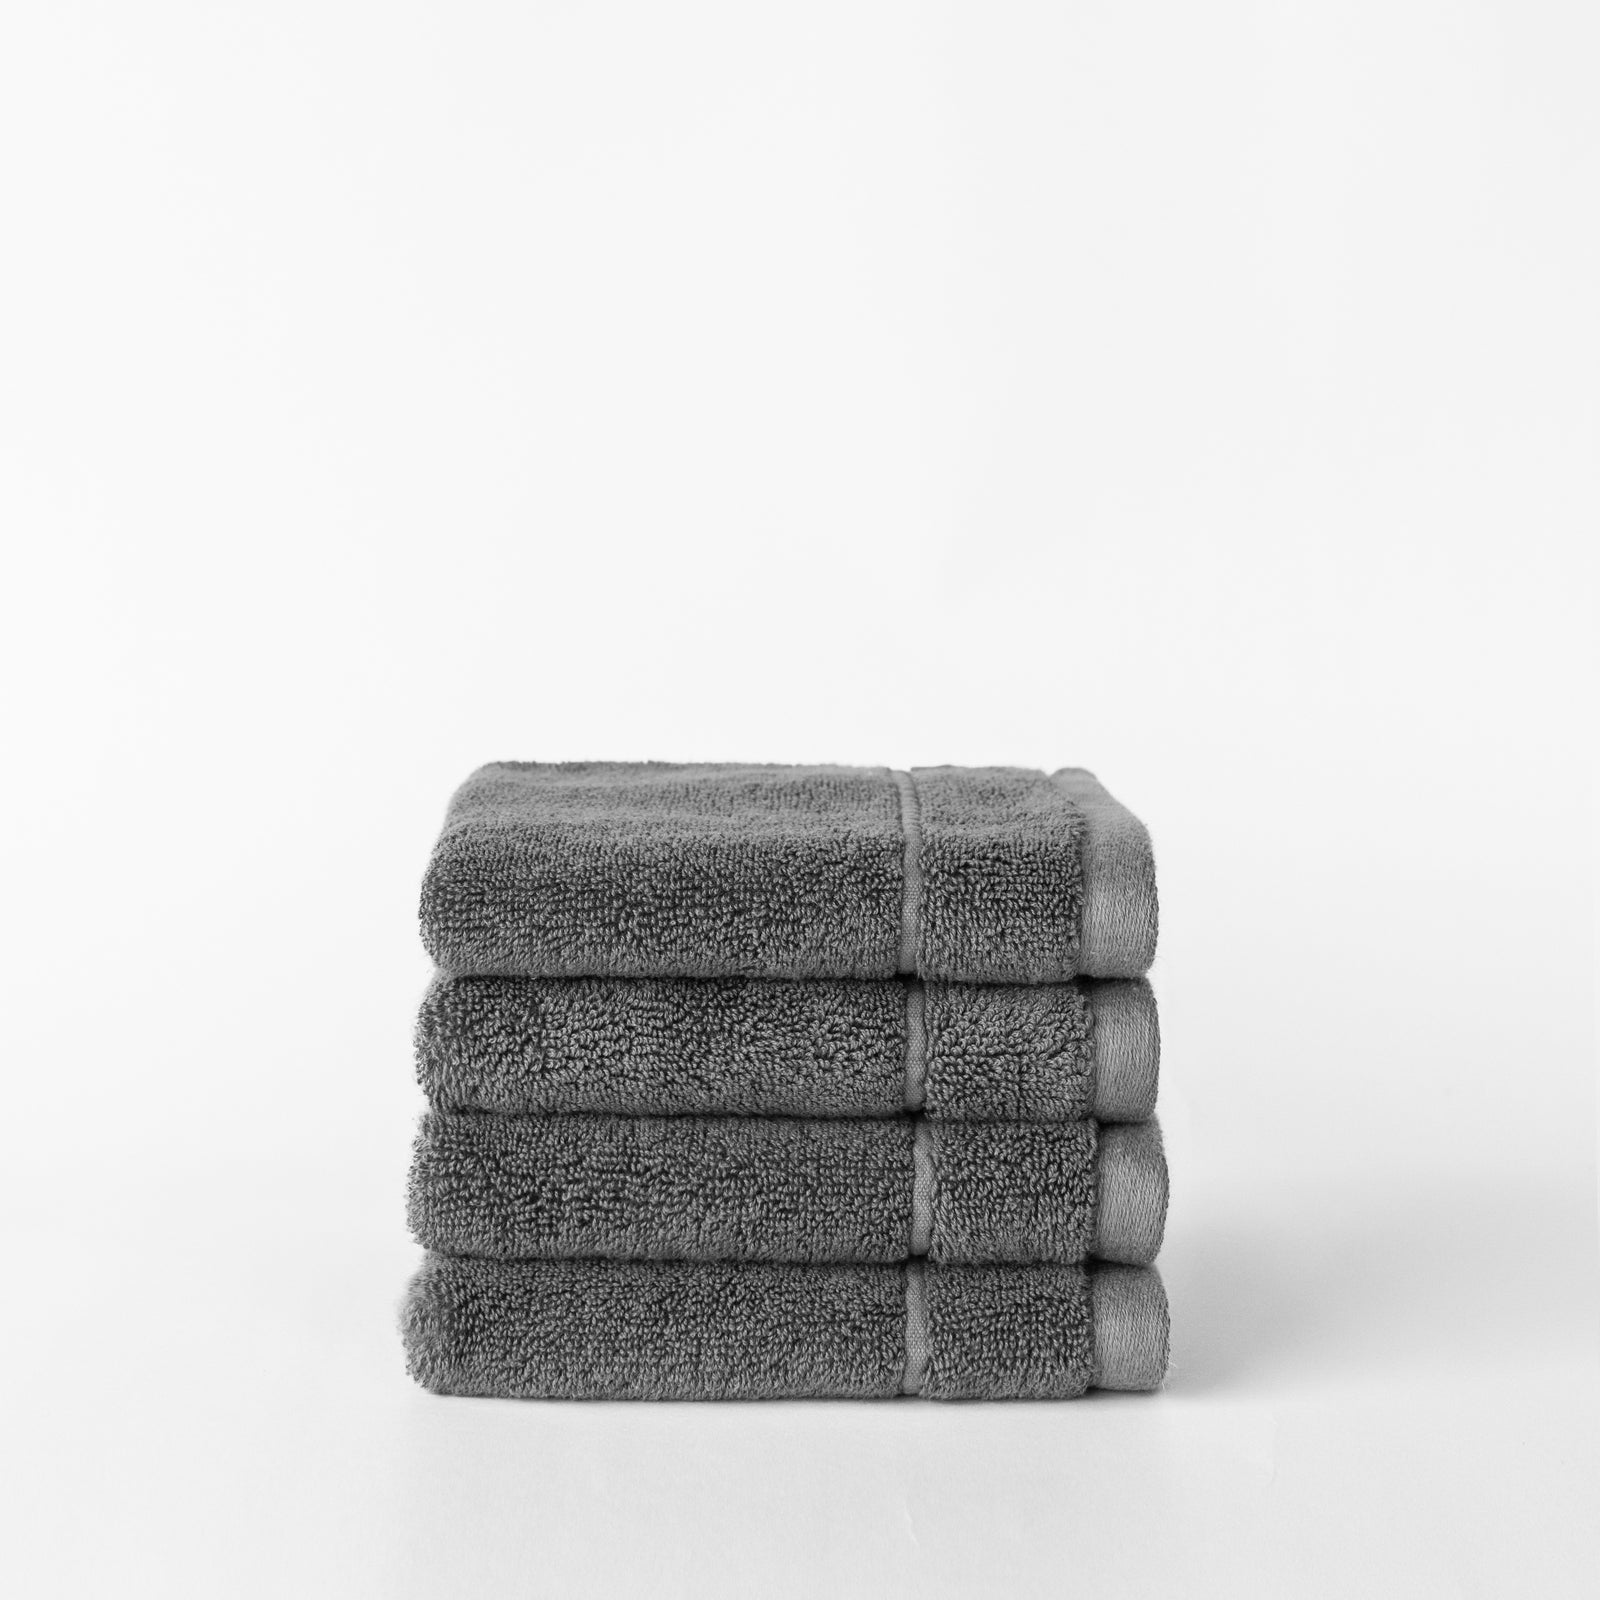 Charcoal Premium Plush Wash Cloths. Photo of Premium Plush Wash Cloths taken with white background 